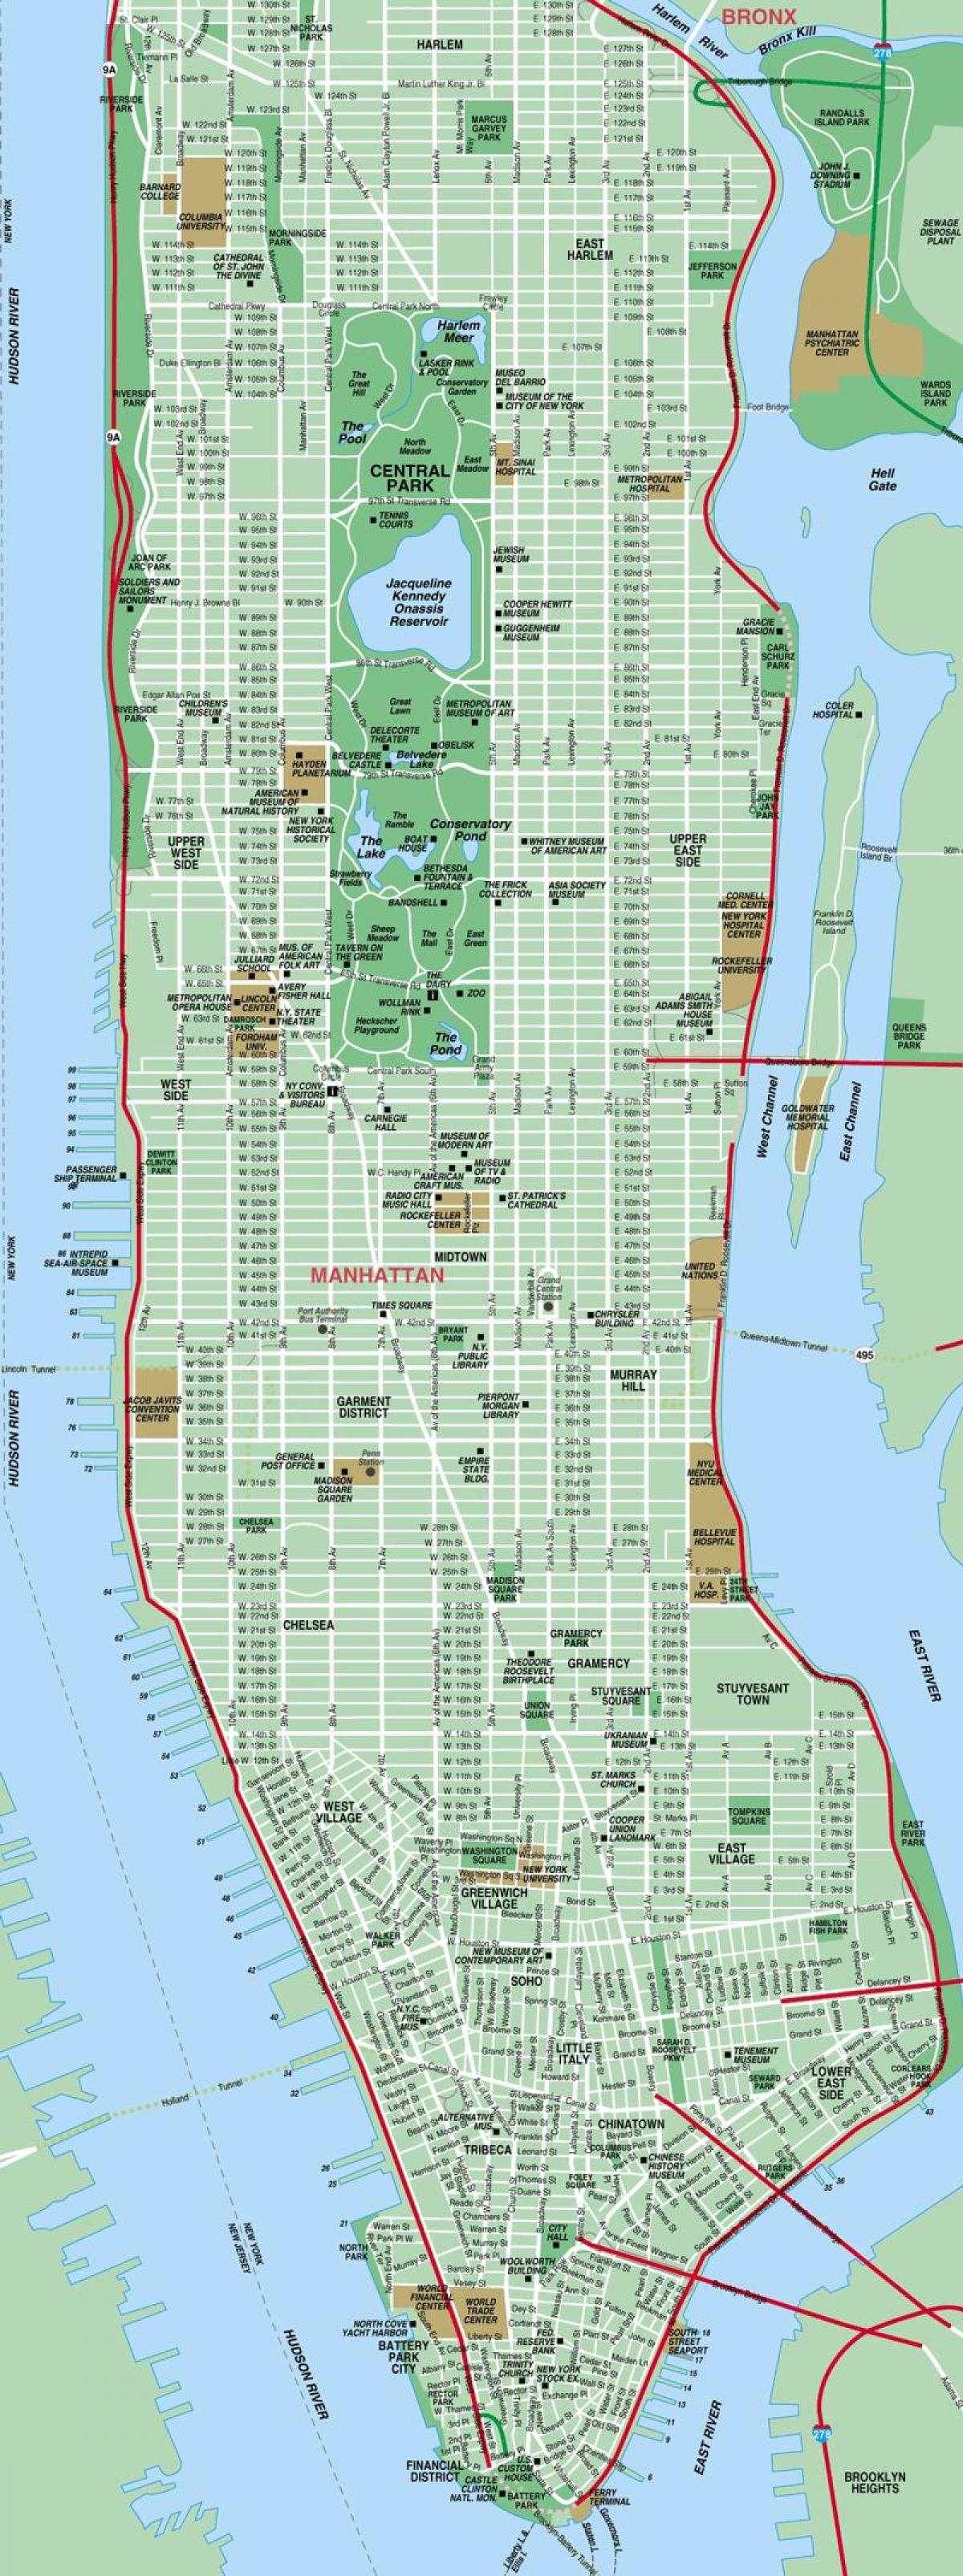 Strada di Manhattan mappa high dettaglio